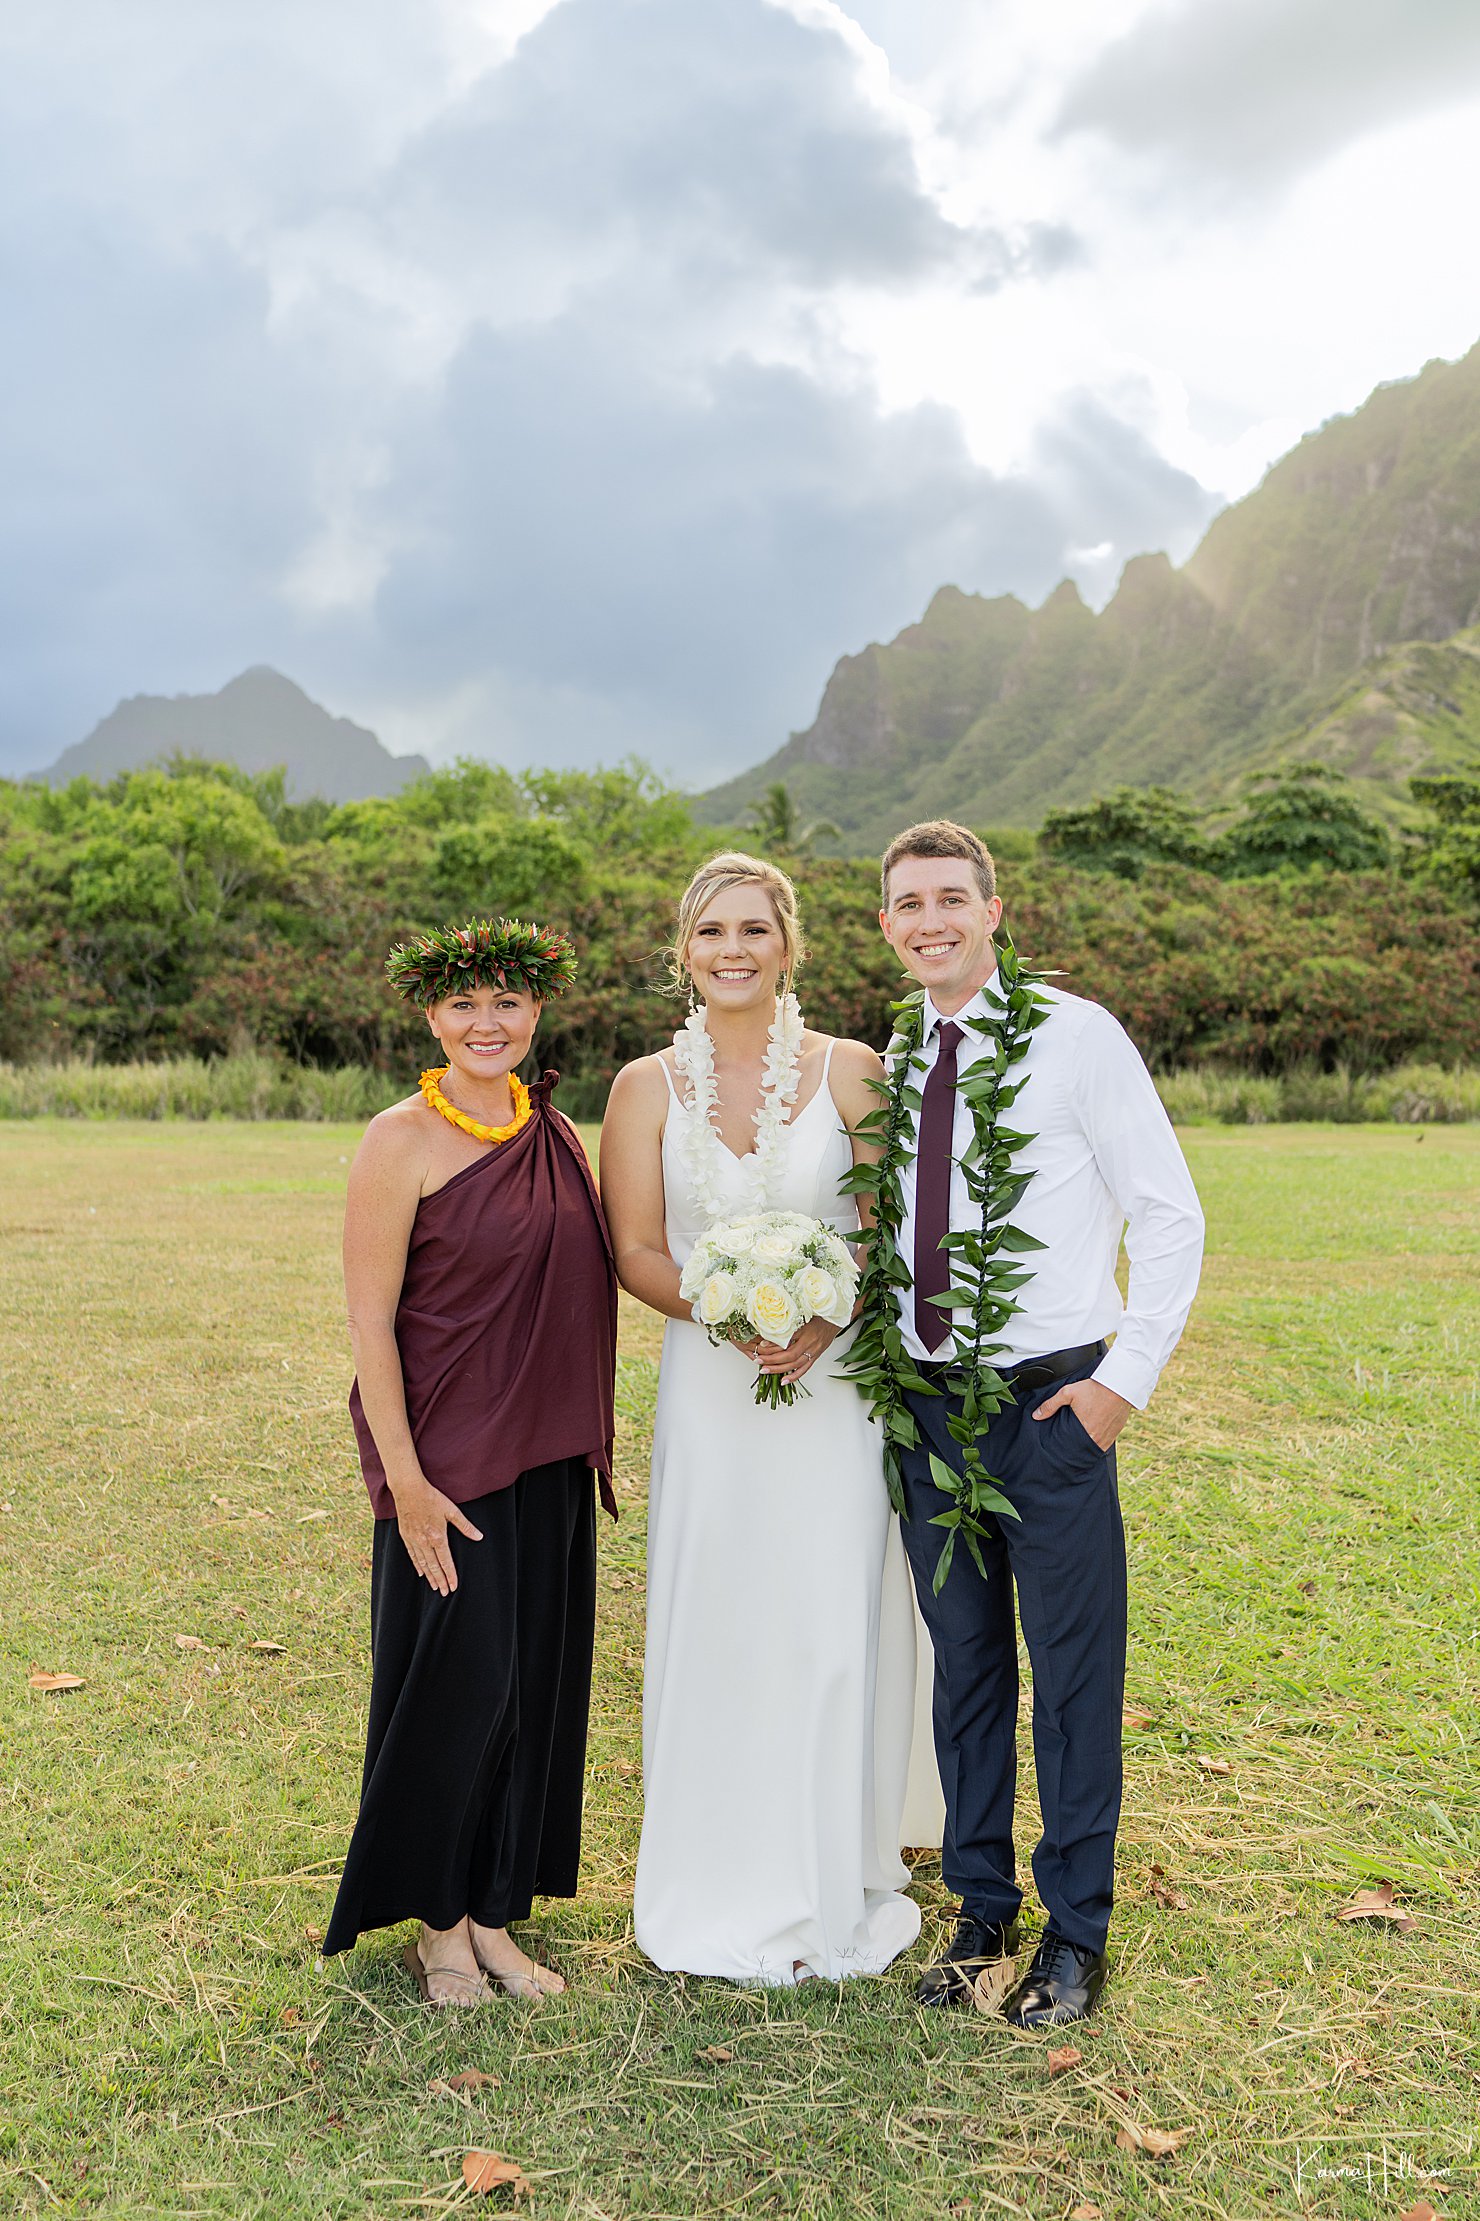 Wedding officiants Oahu